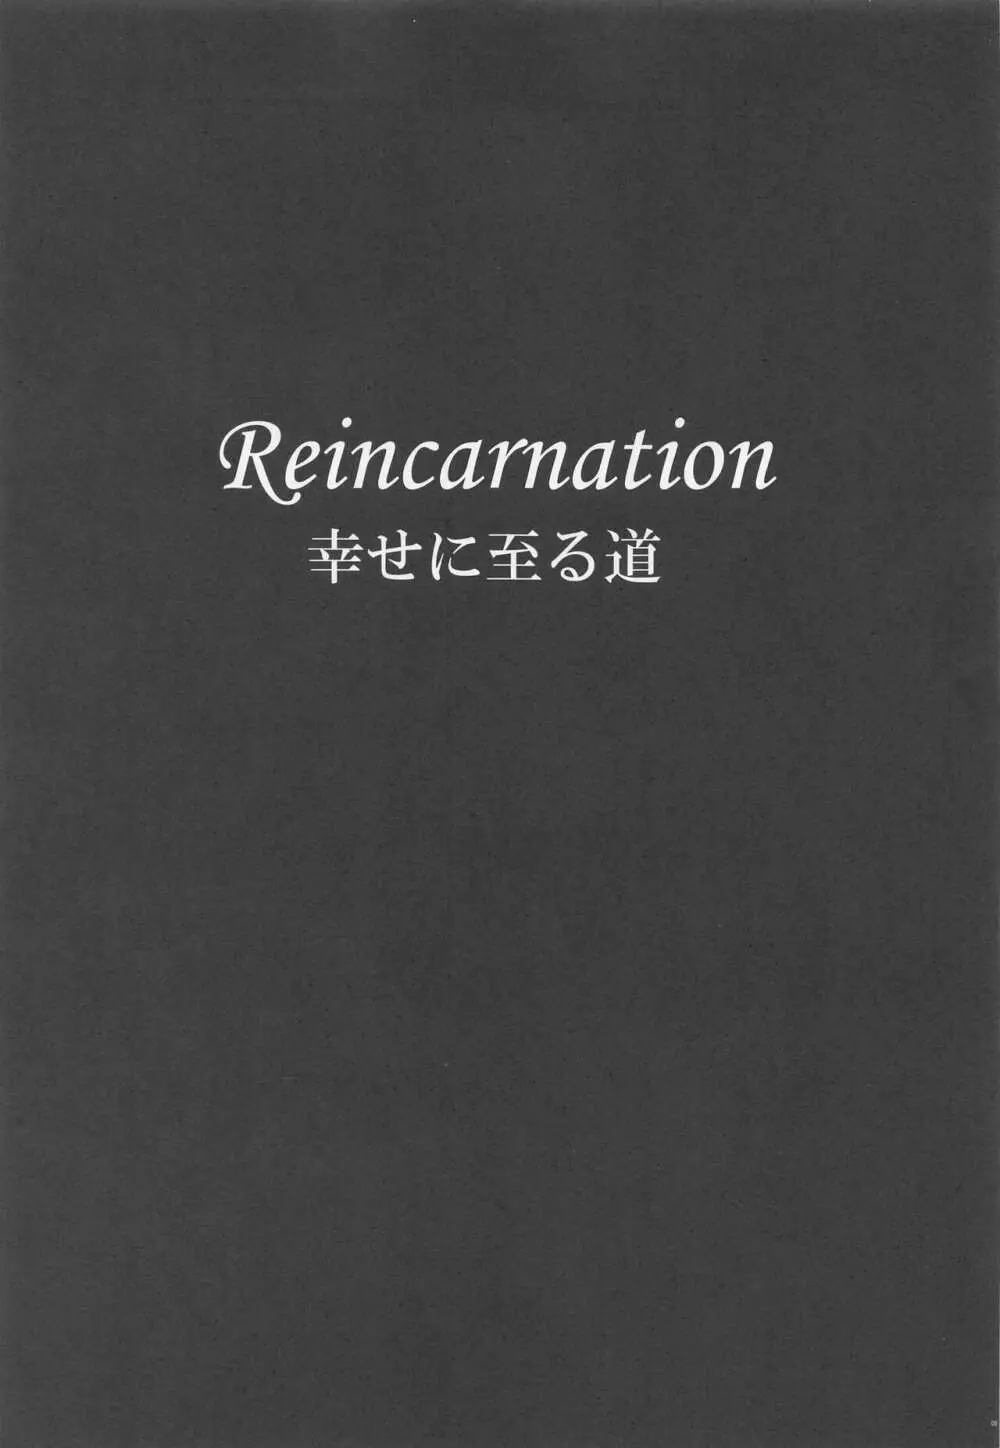 Reincarnation - page4